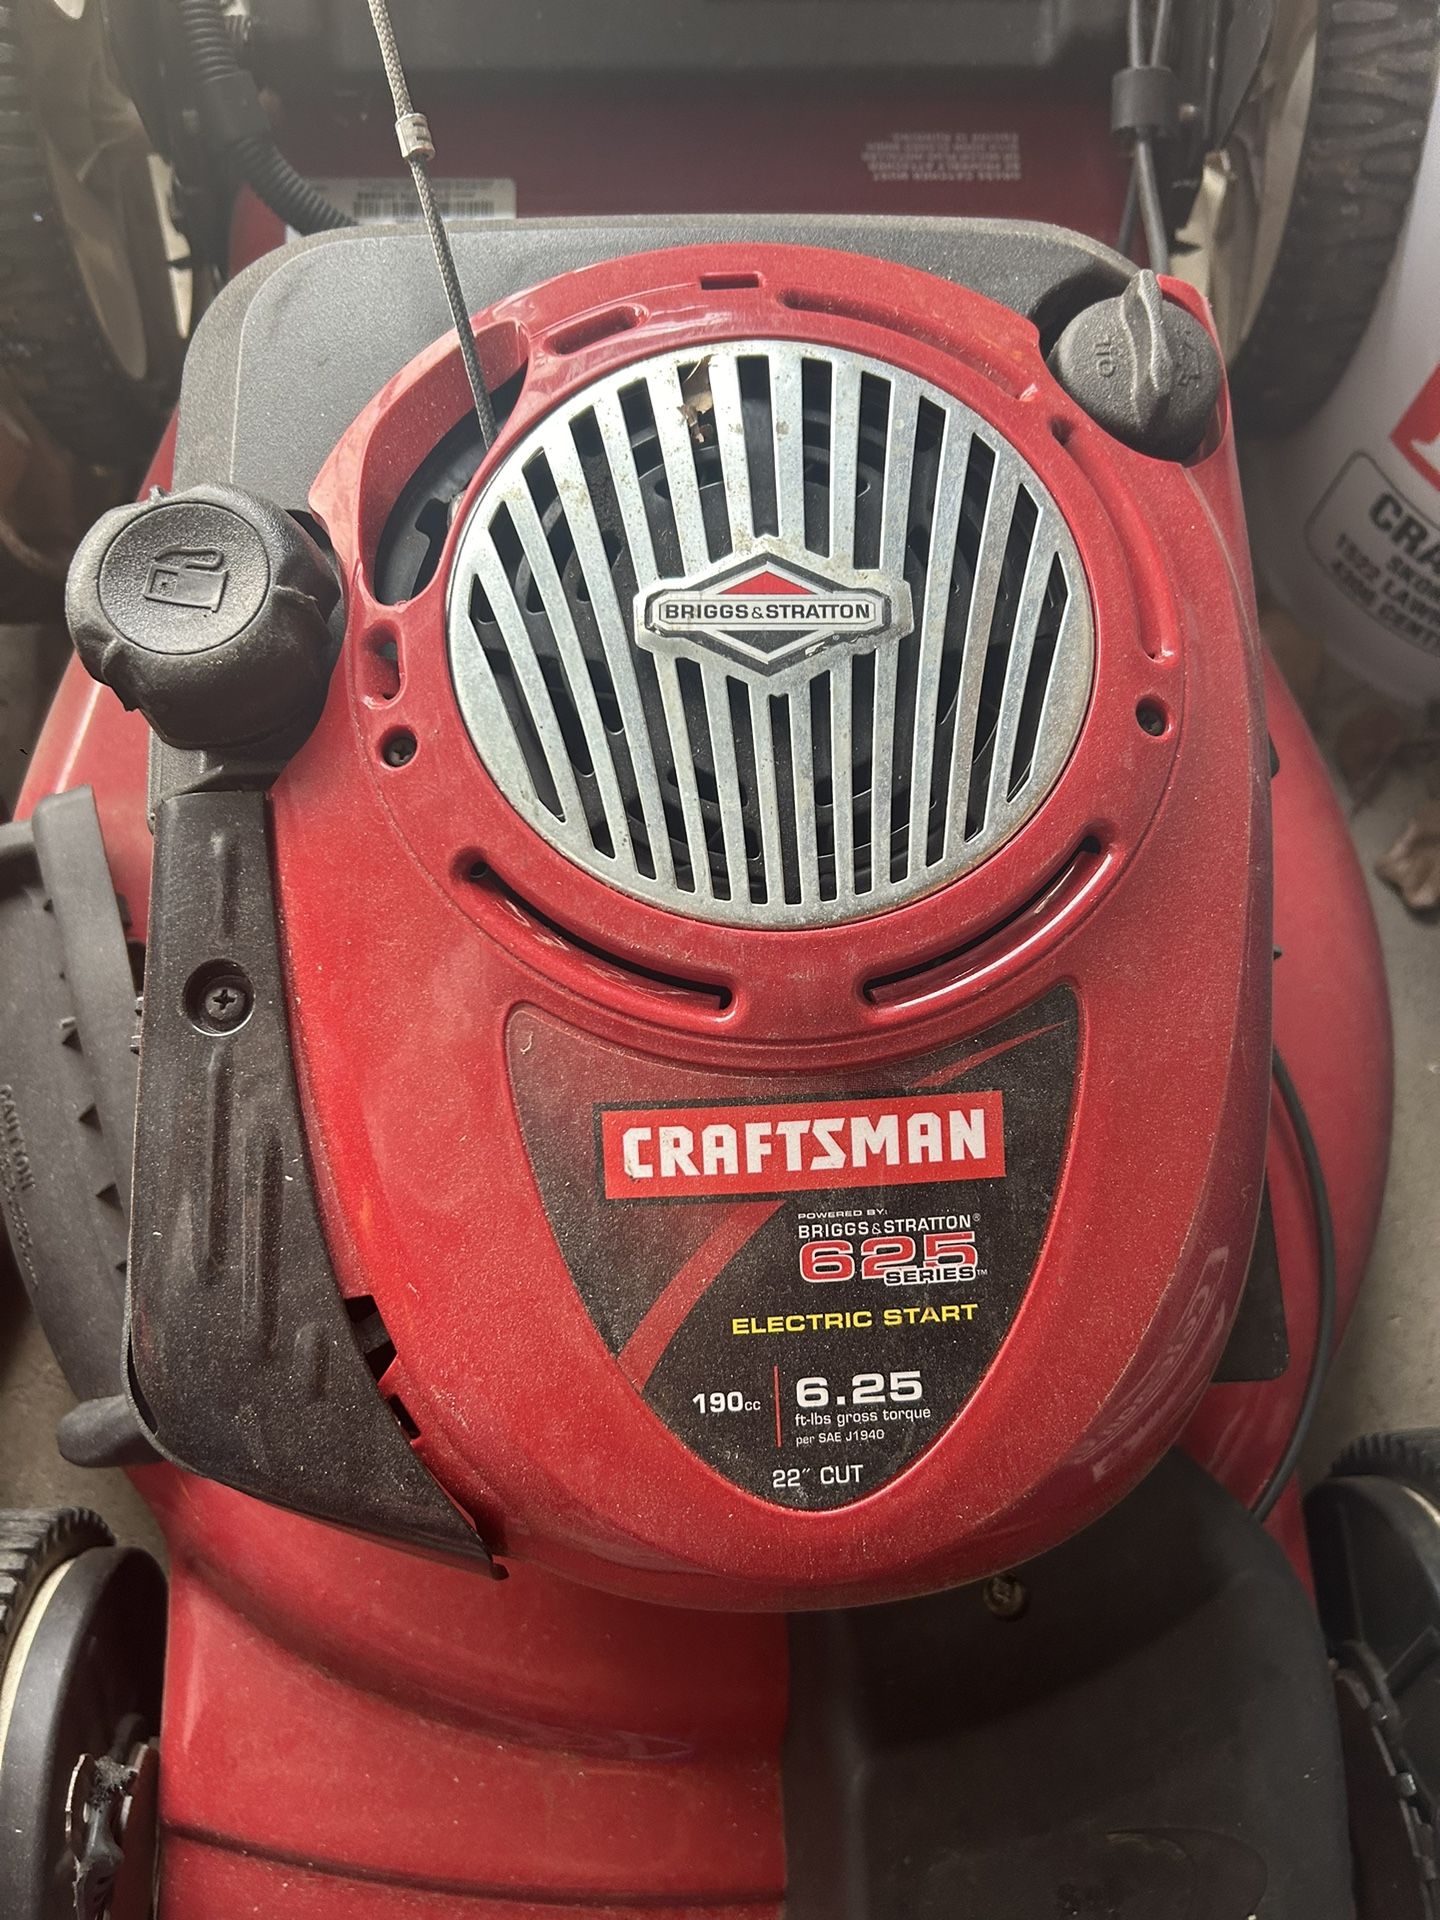 Craftsman lawn mower - $200